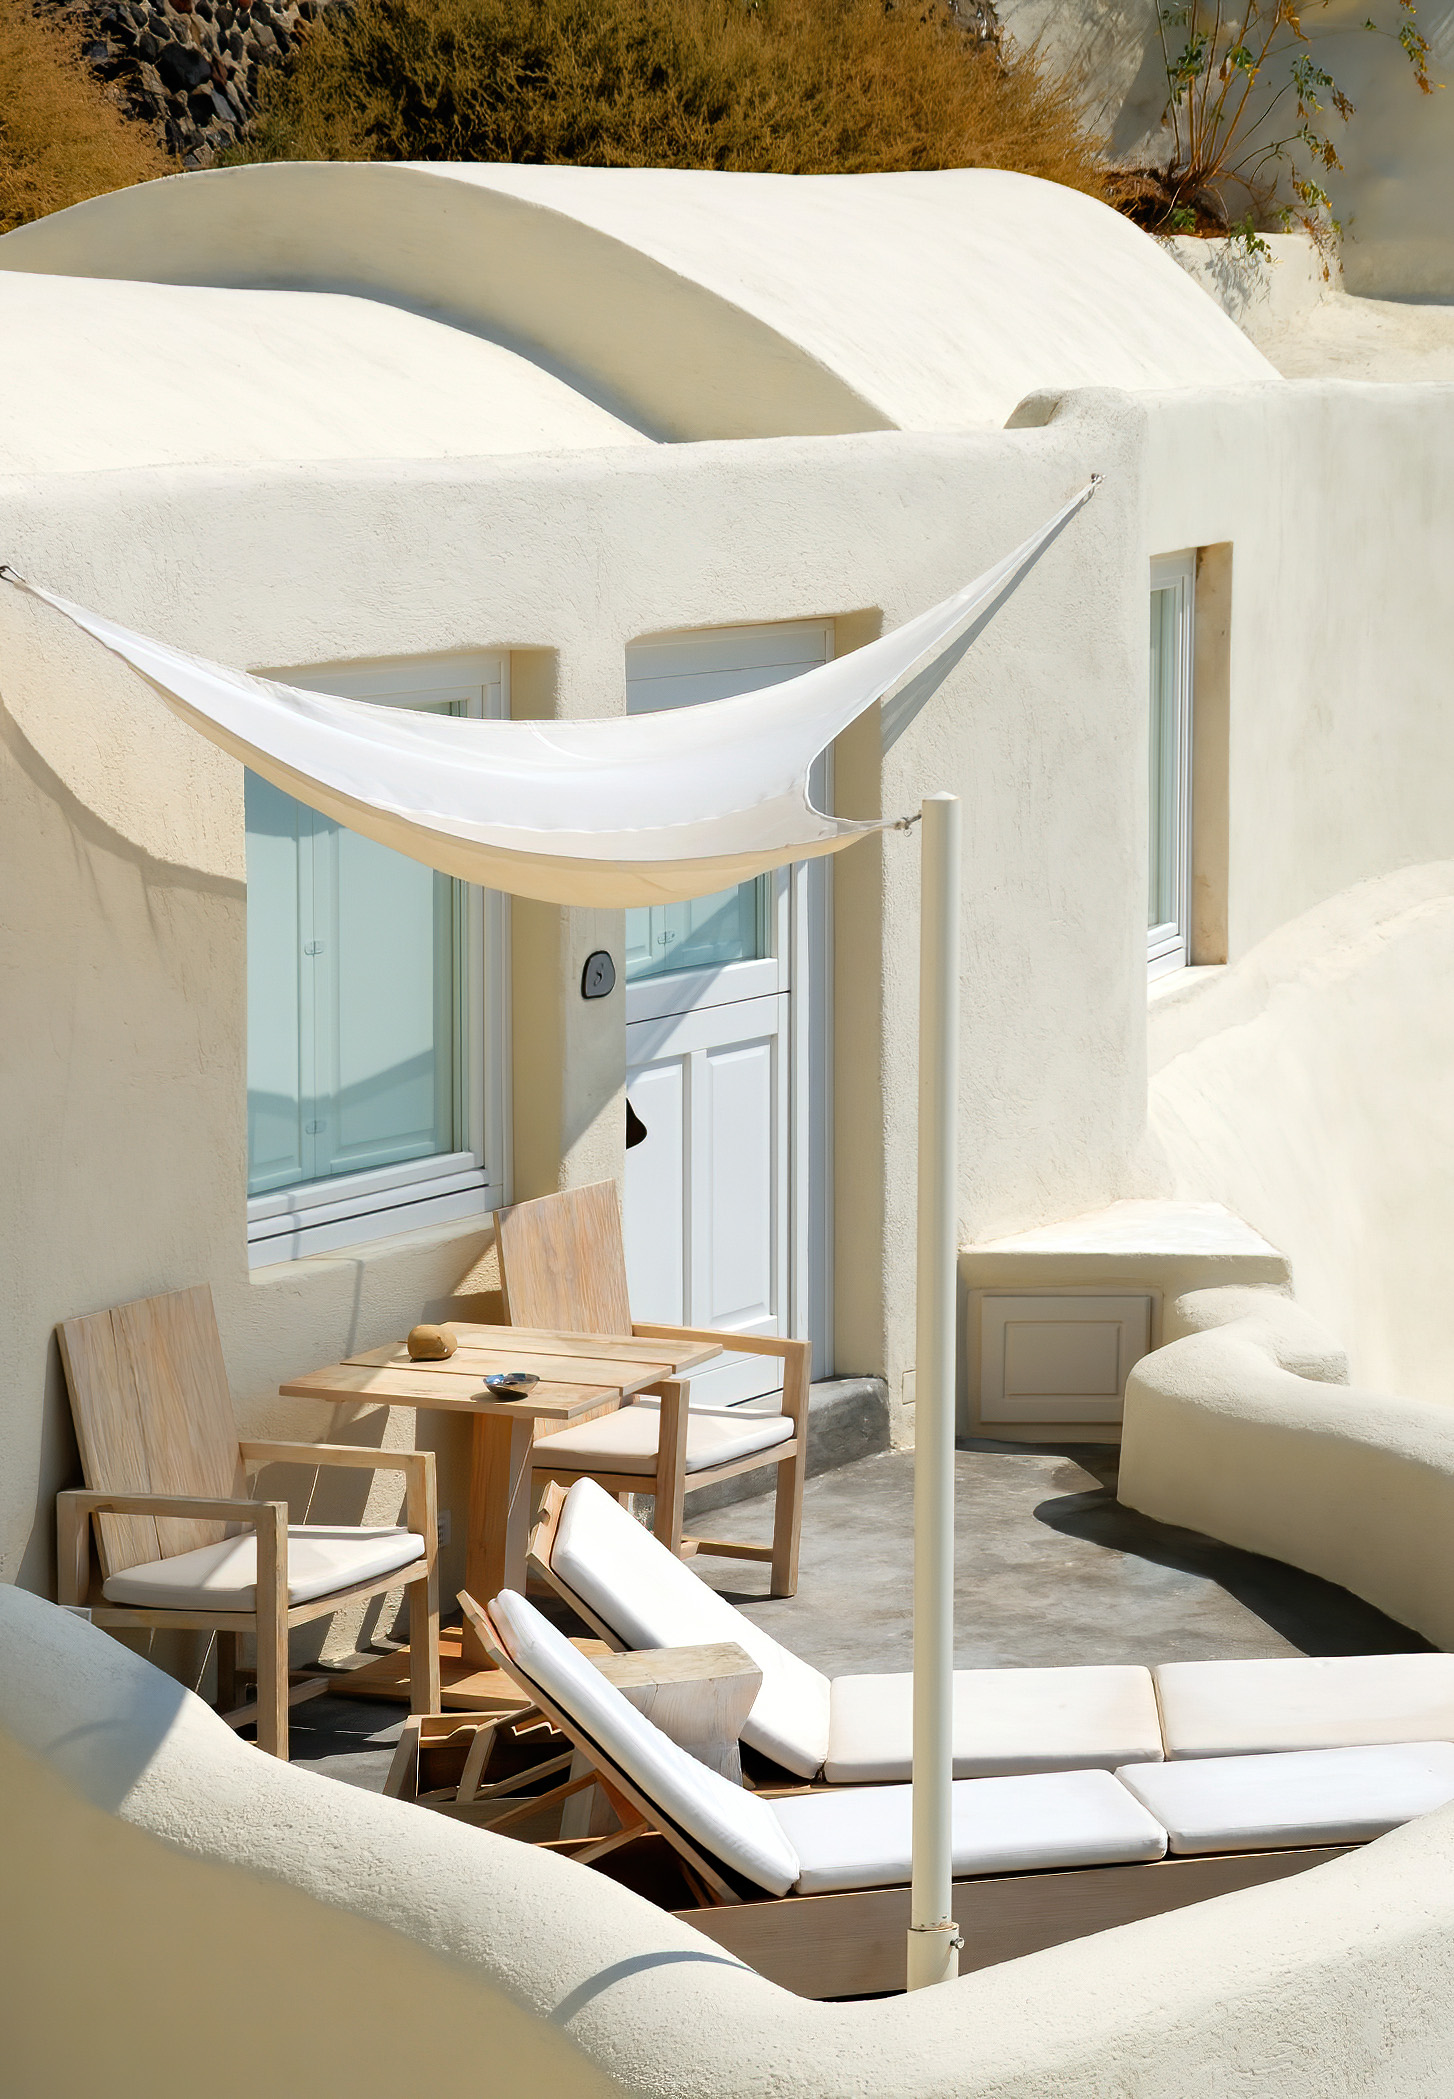 Mystique Hotel Santorini – Oia, Santorini Island, Greece – Clifftop Balcony